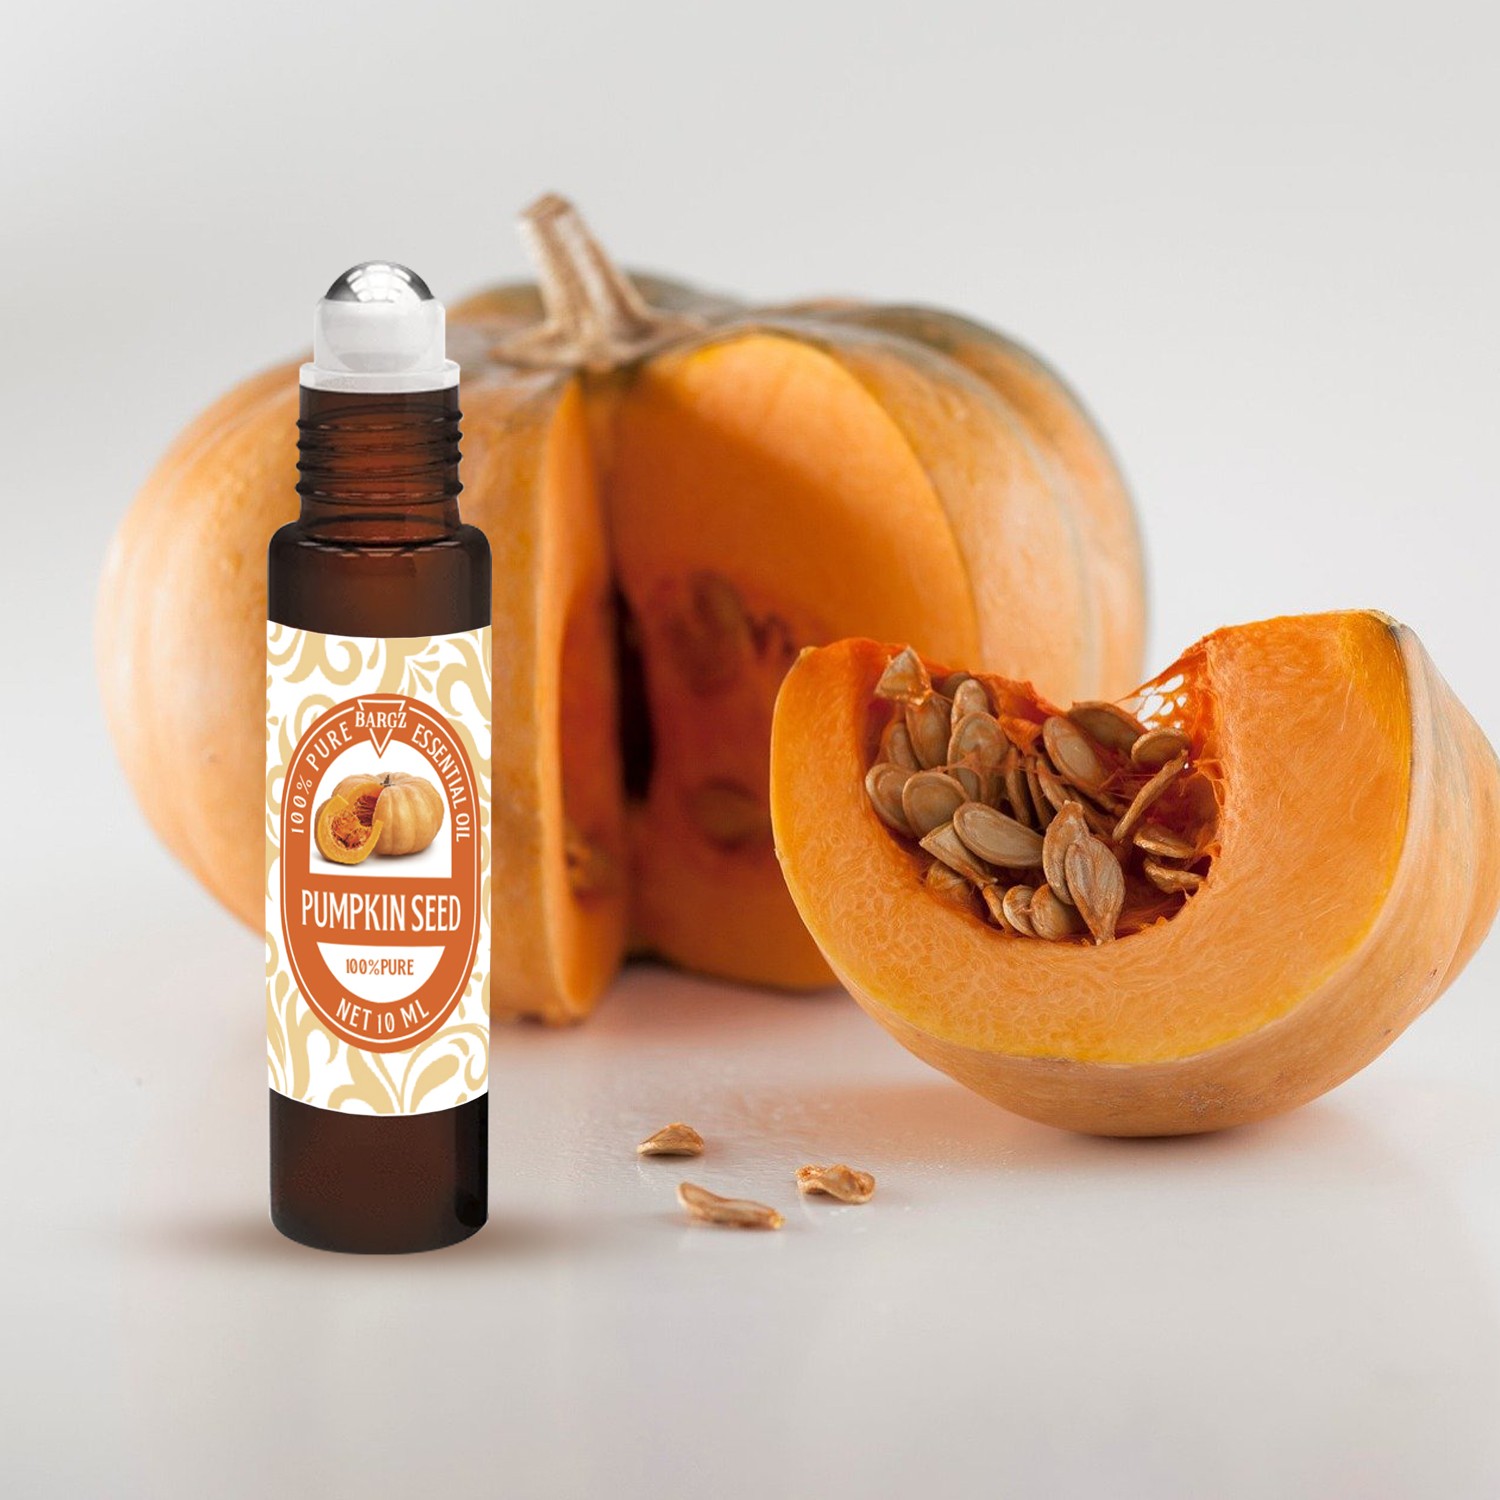 Benefits of Using Pumpkin Seed Essential Oil